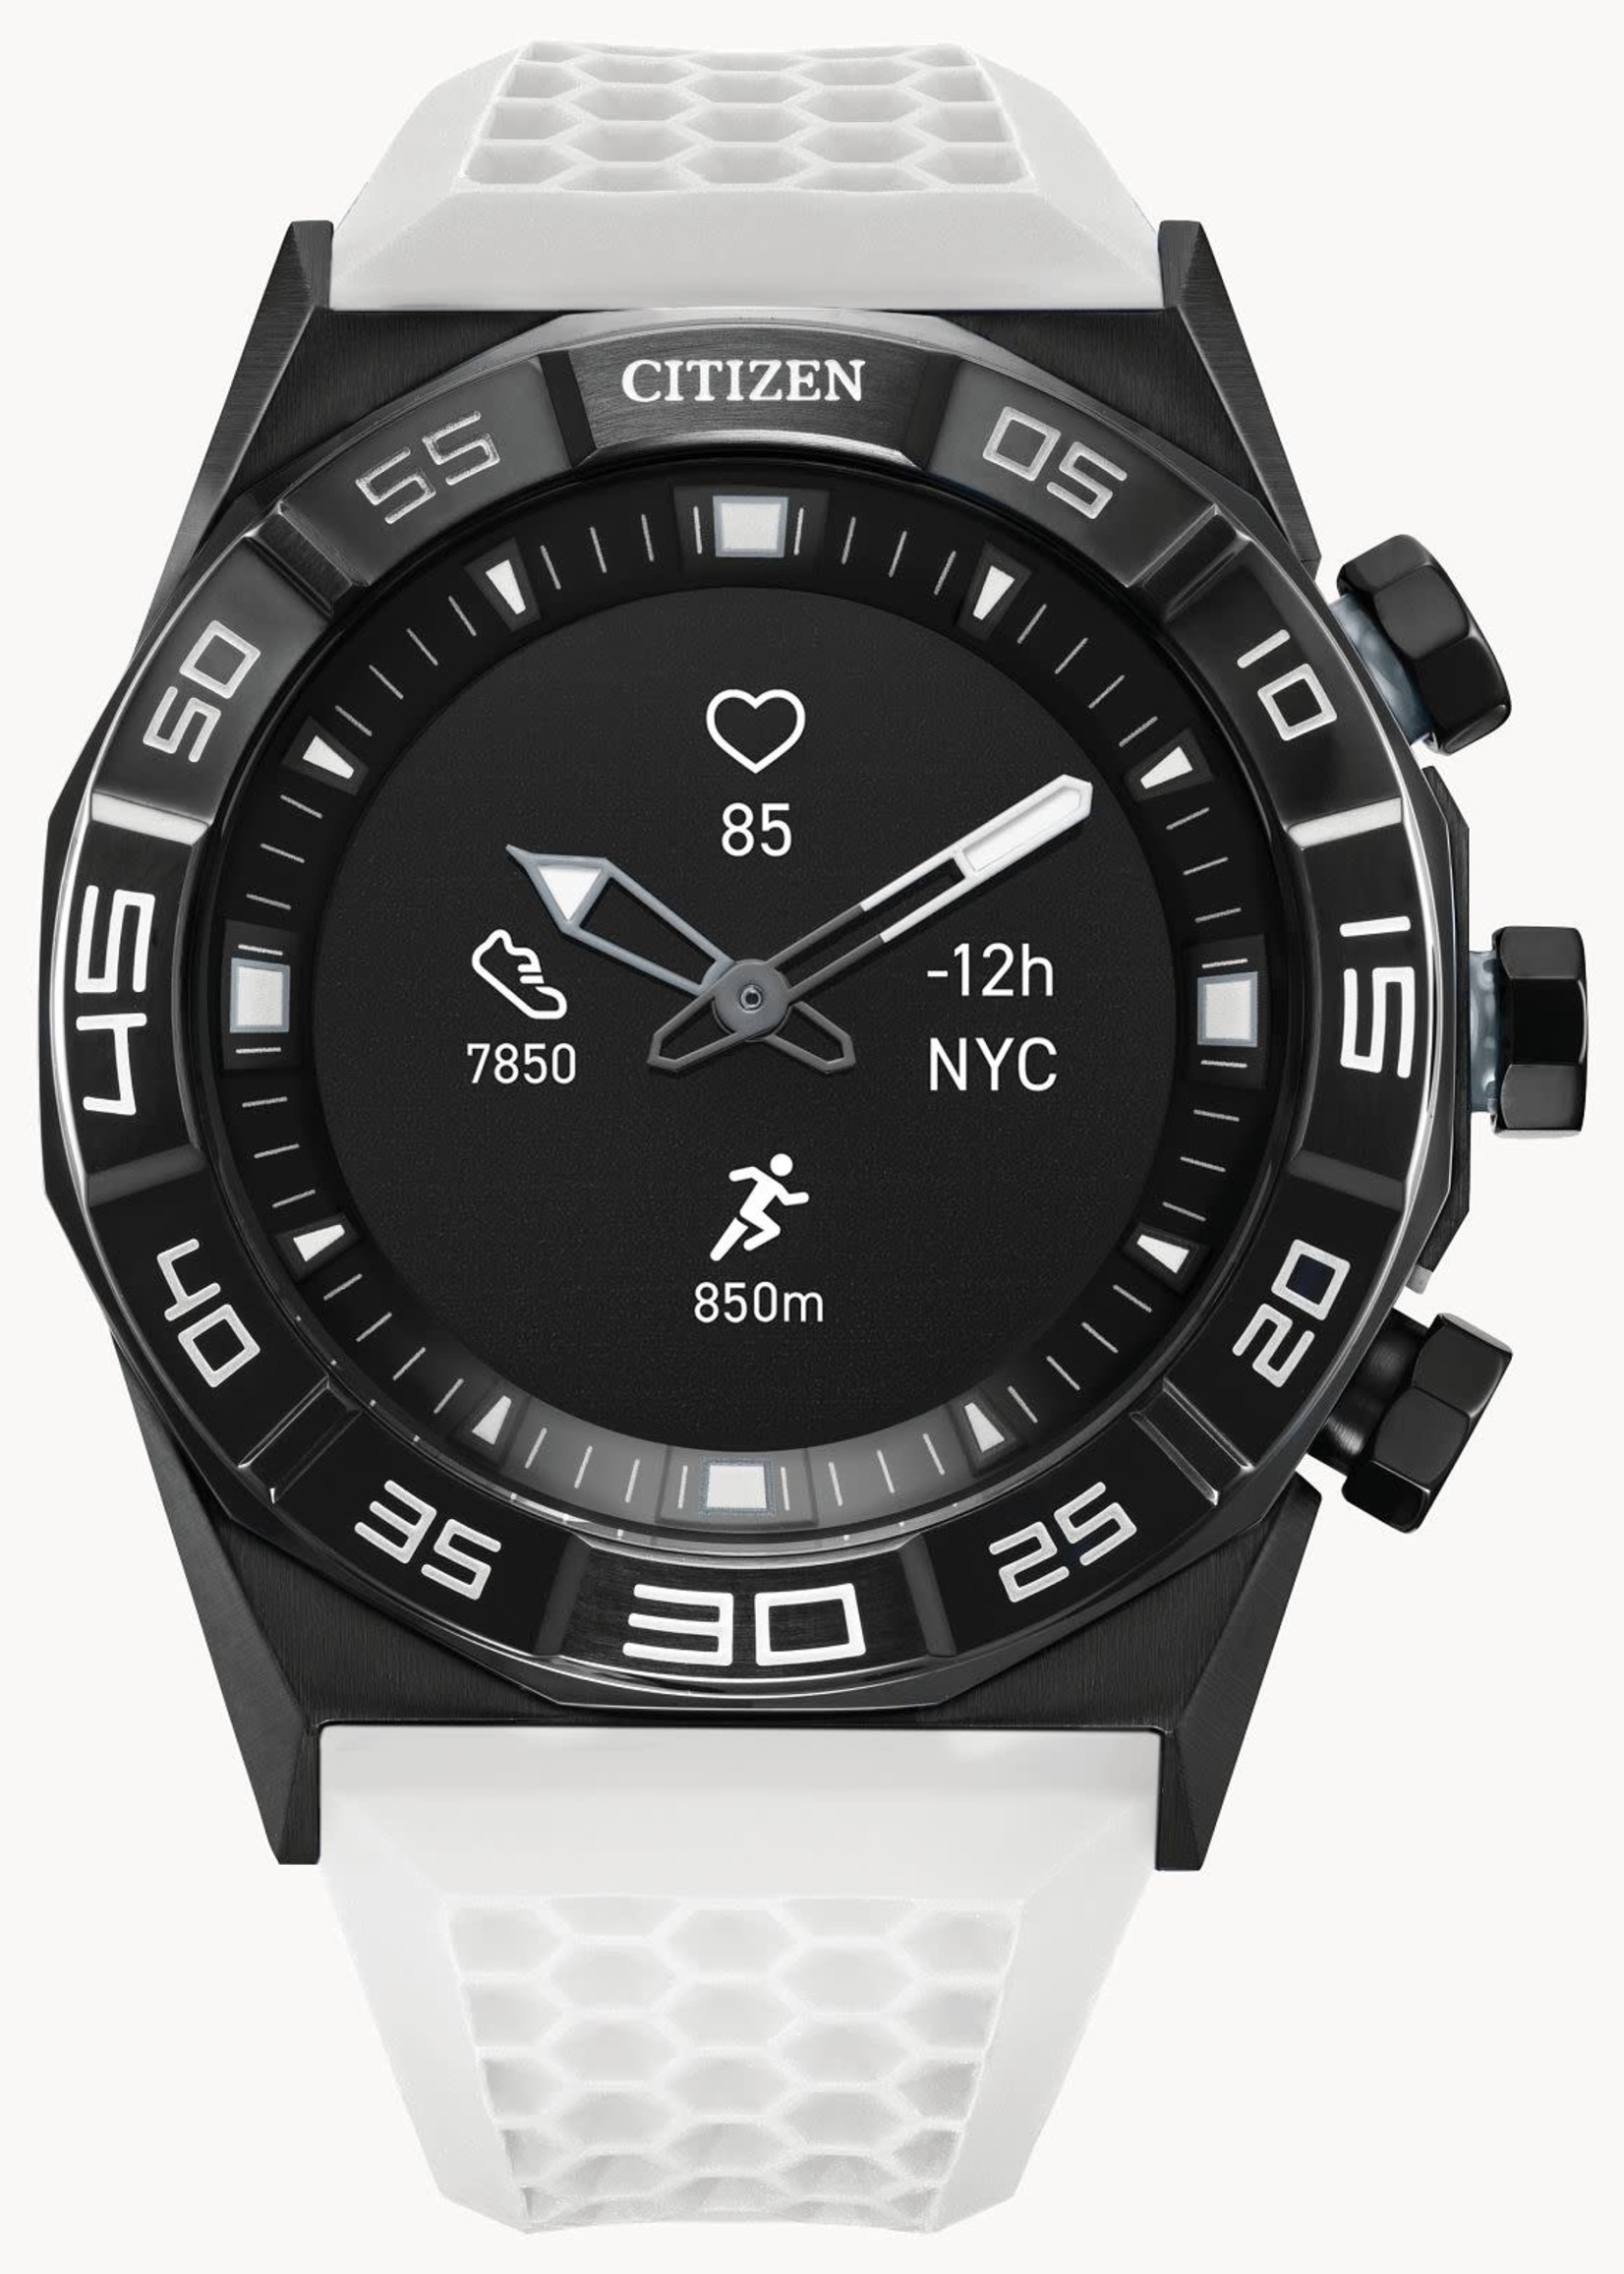 CITIZEN WATCH COMPANY Citizen Smart Hybrid Watch White Strap